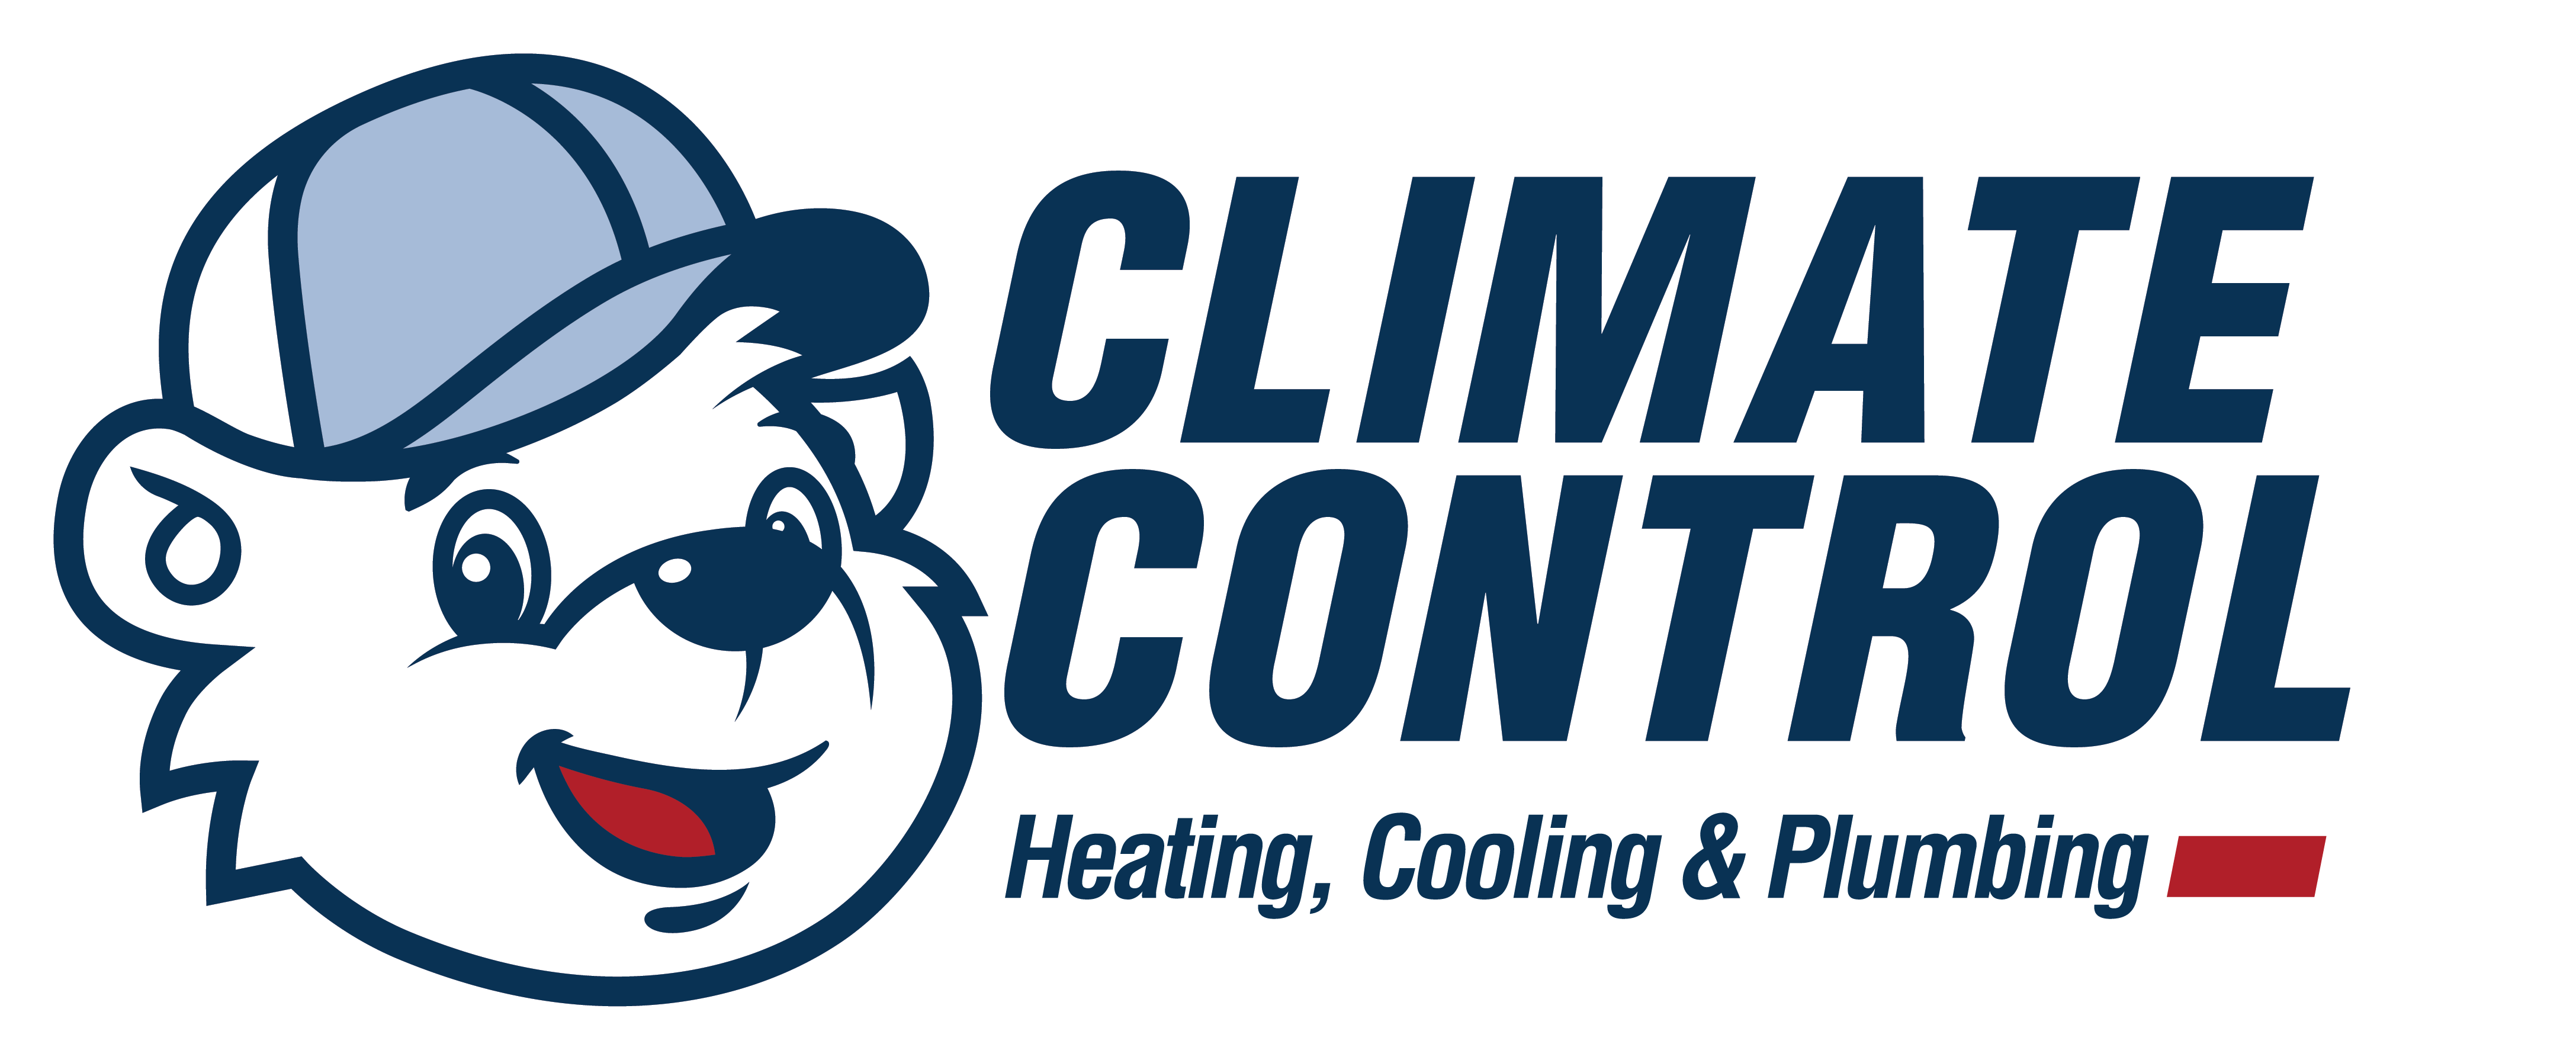 Climate Control logo - color